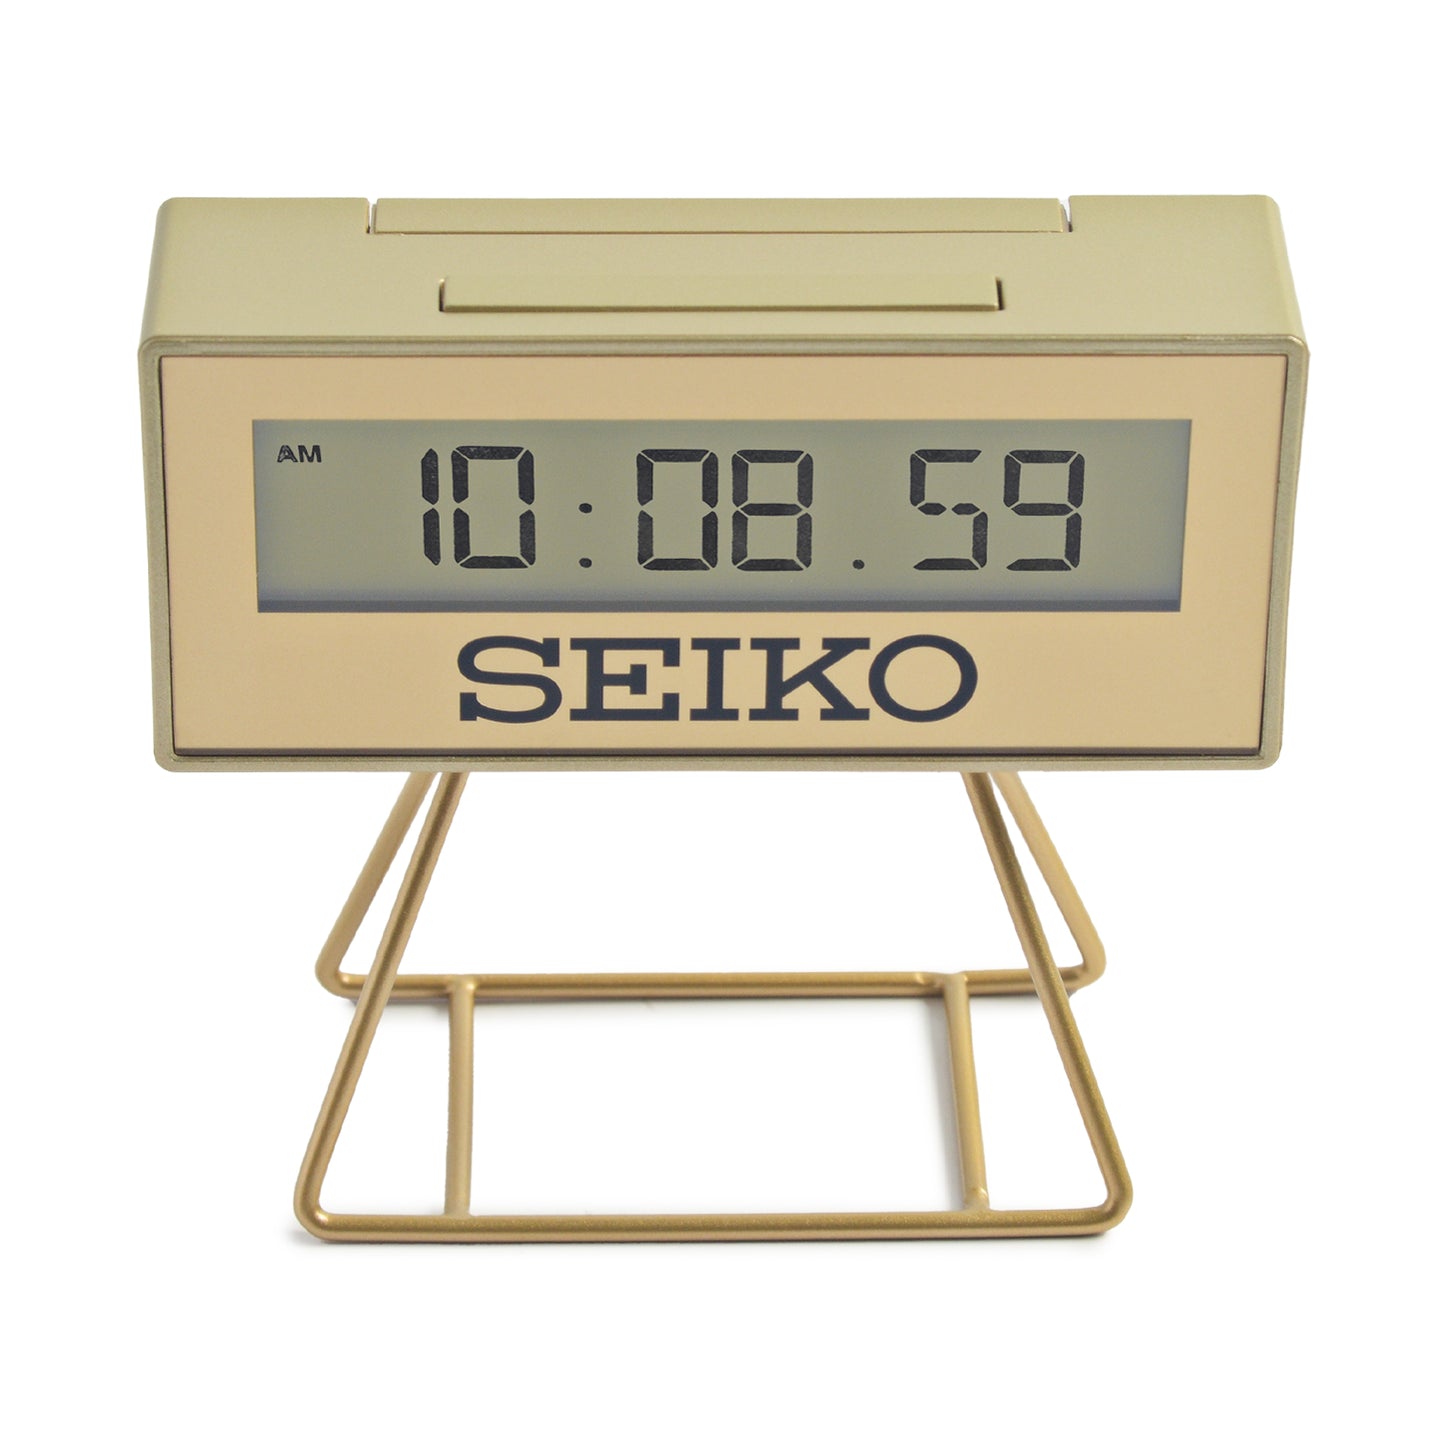 Seiko Victory Limited Edition Alarm Clock